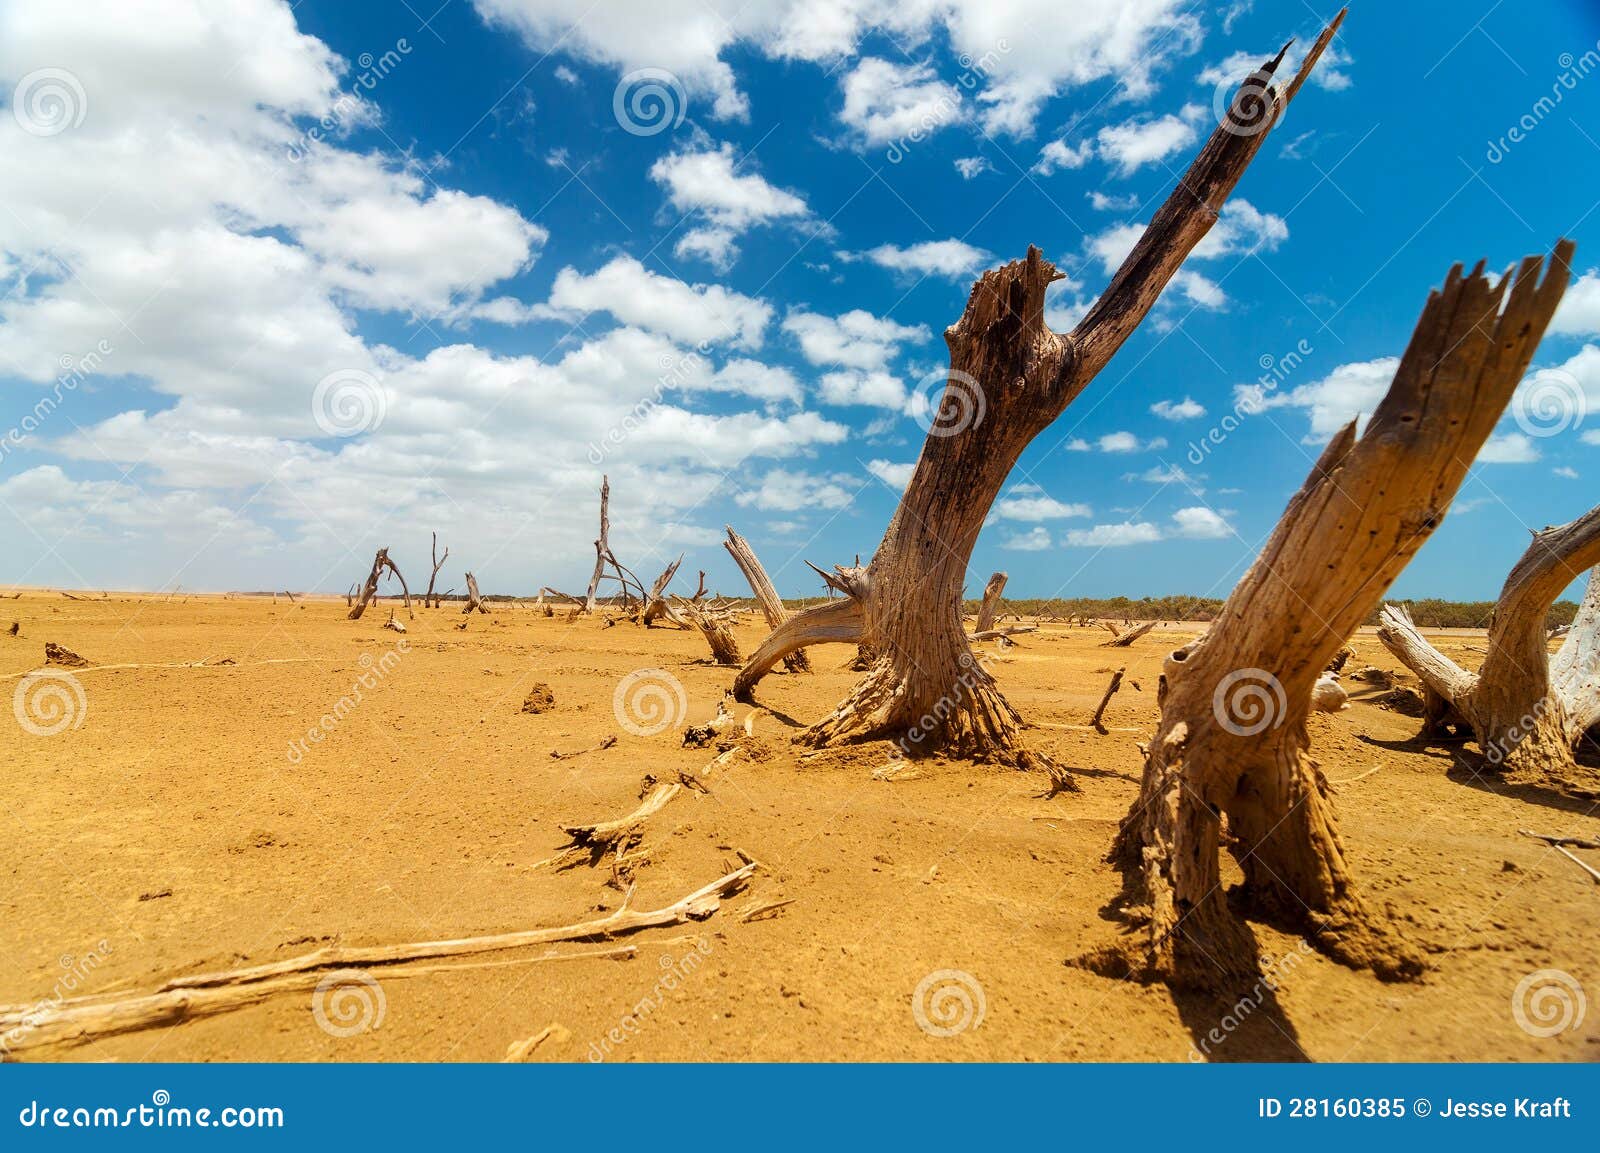 dead trees in a desert wasteland